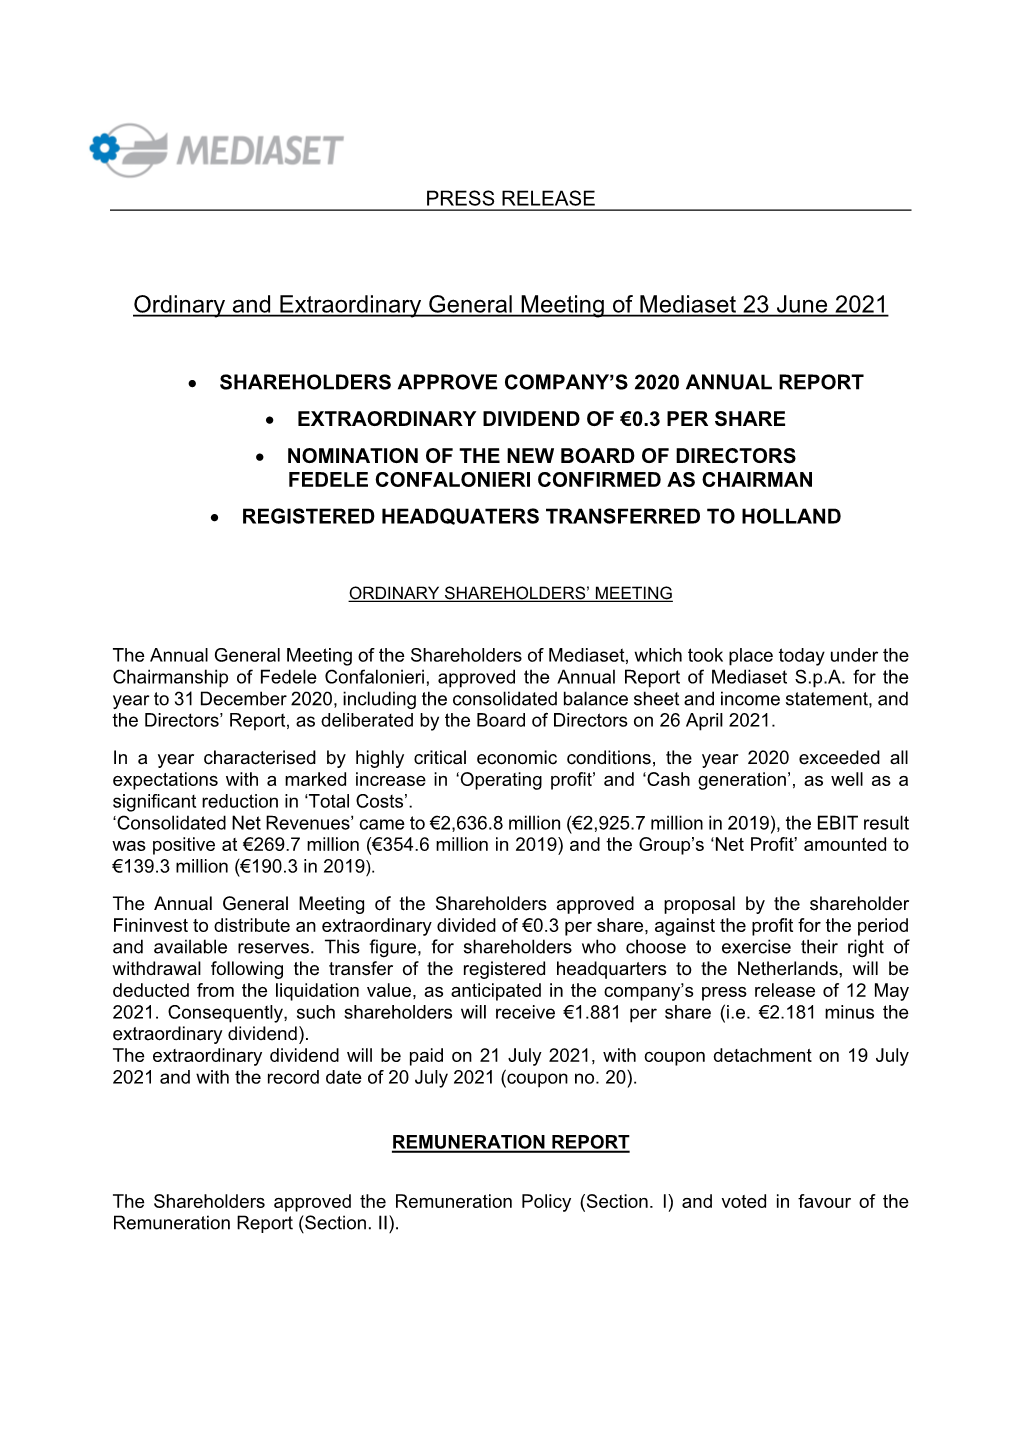 Ordinary and Extraordinary General Meeting of Mediaset 23 June 2021